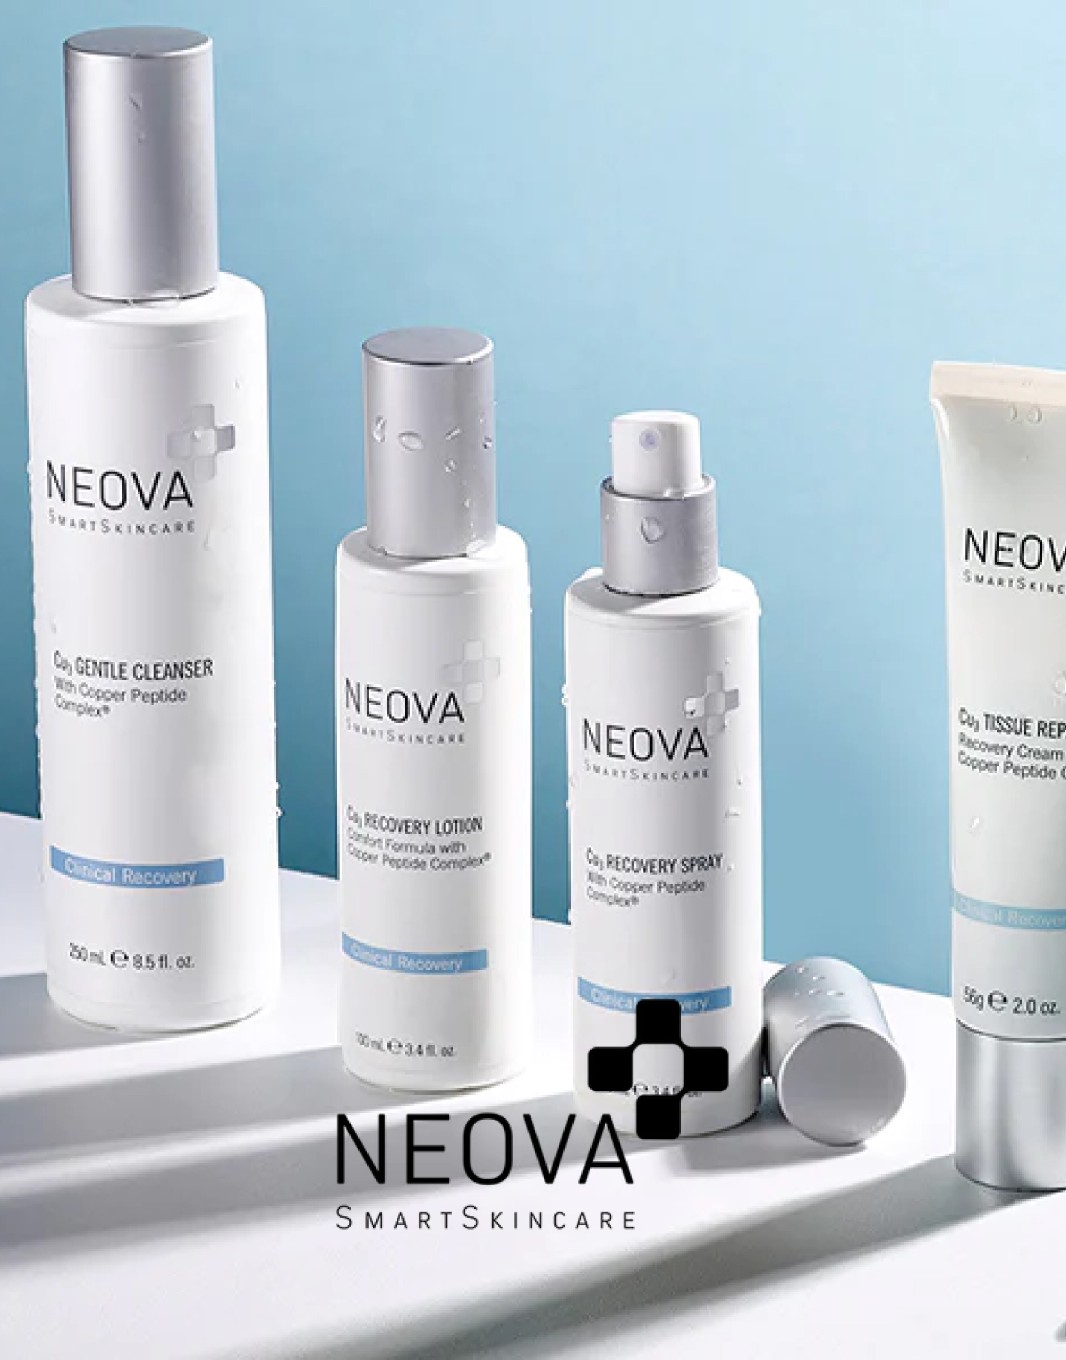 Neova skincare products